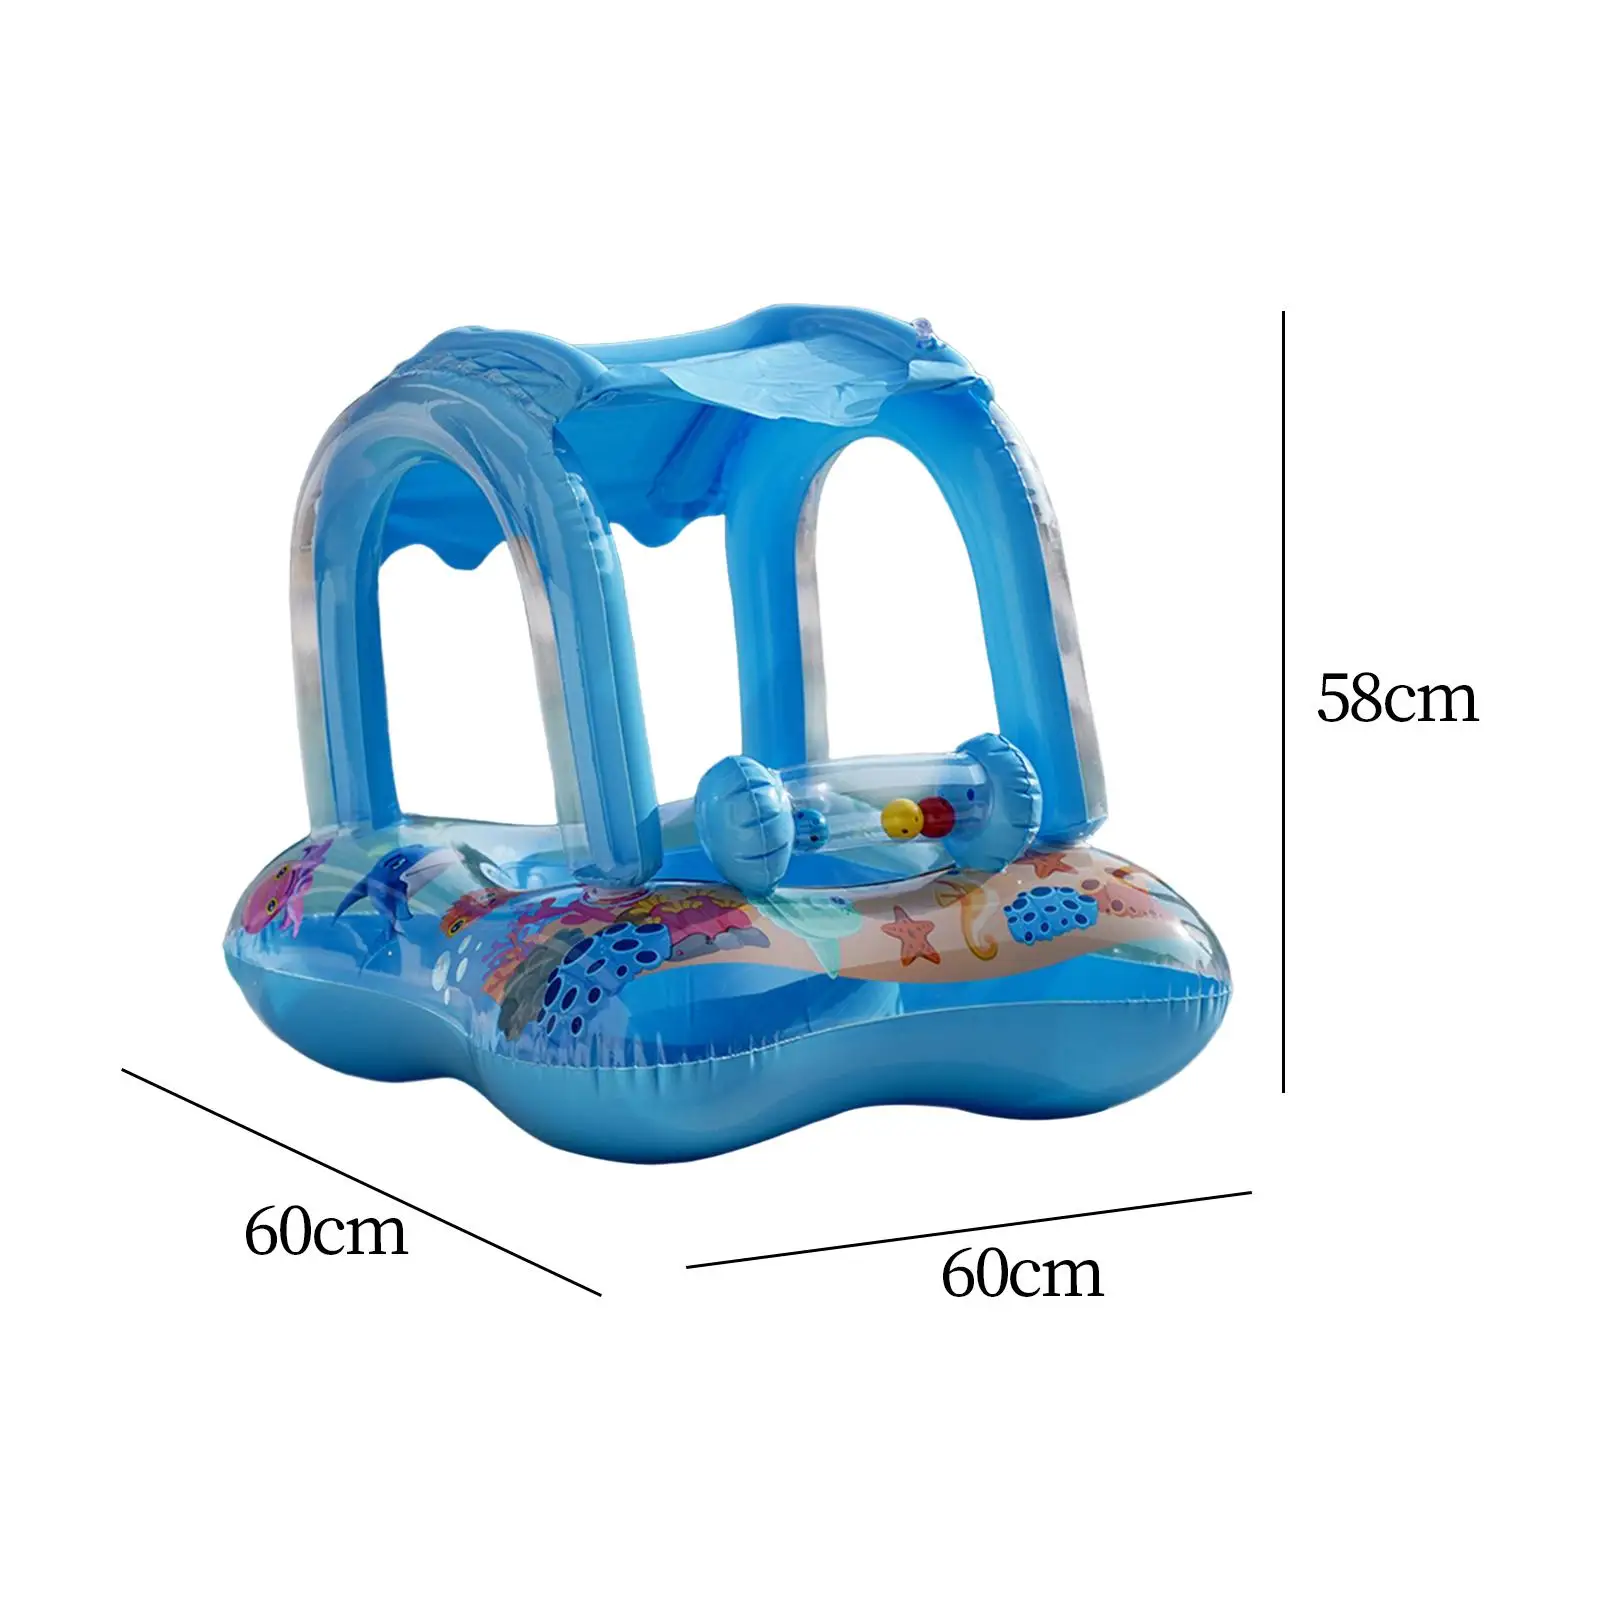 Inflatable Baby Pool Float Water Float for Beginner Swimmers Boys Girls Kids